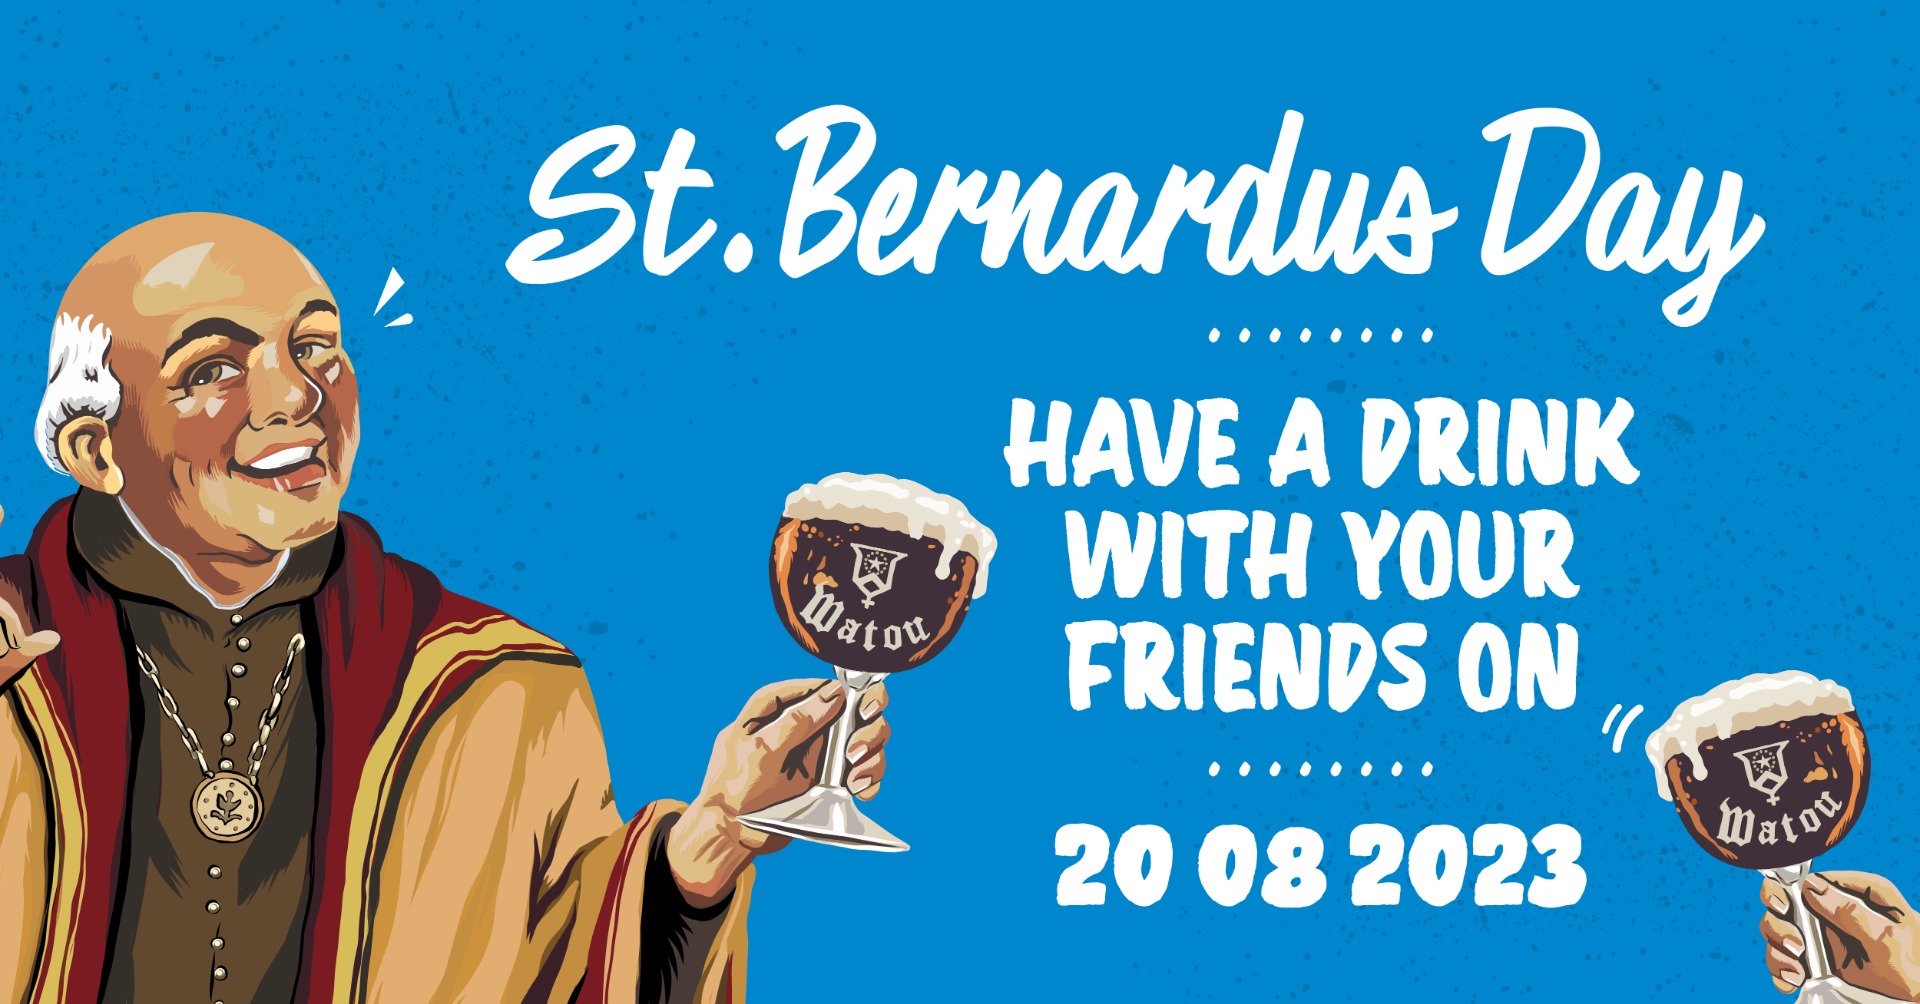 St.Bernardus Day 2023